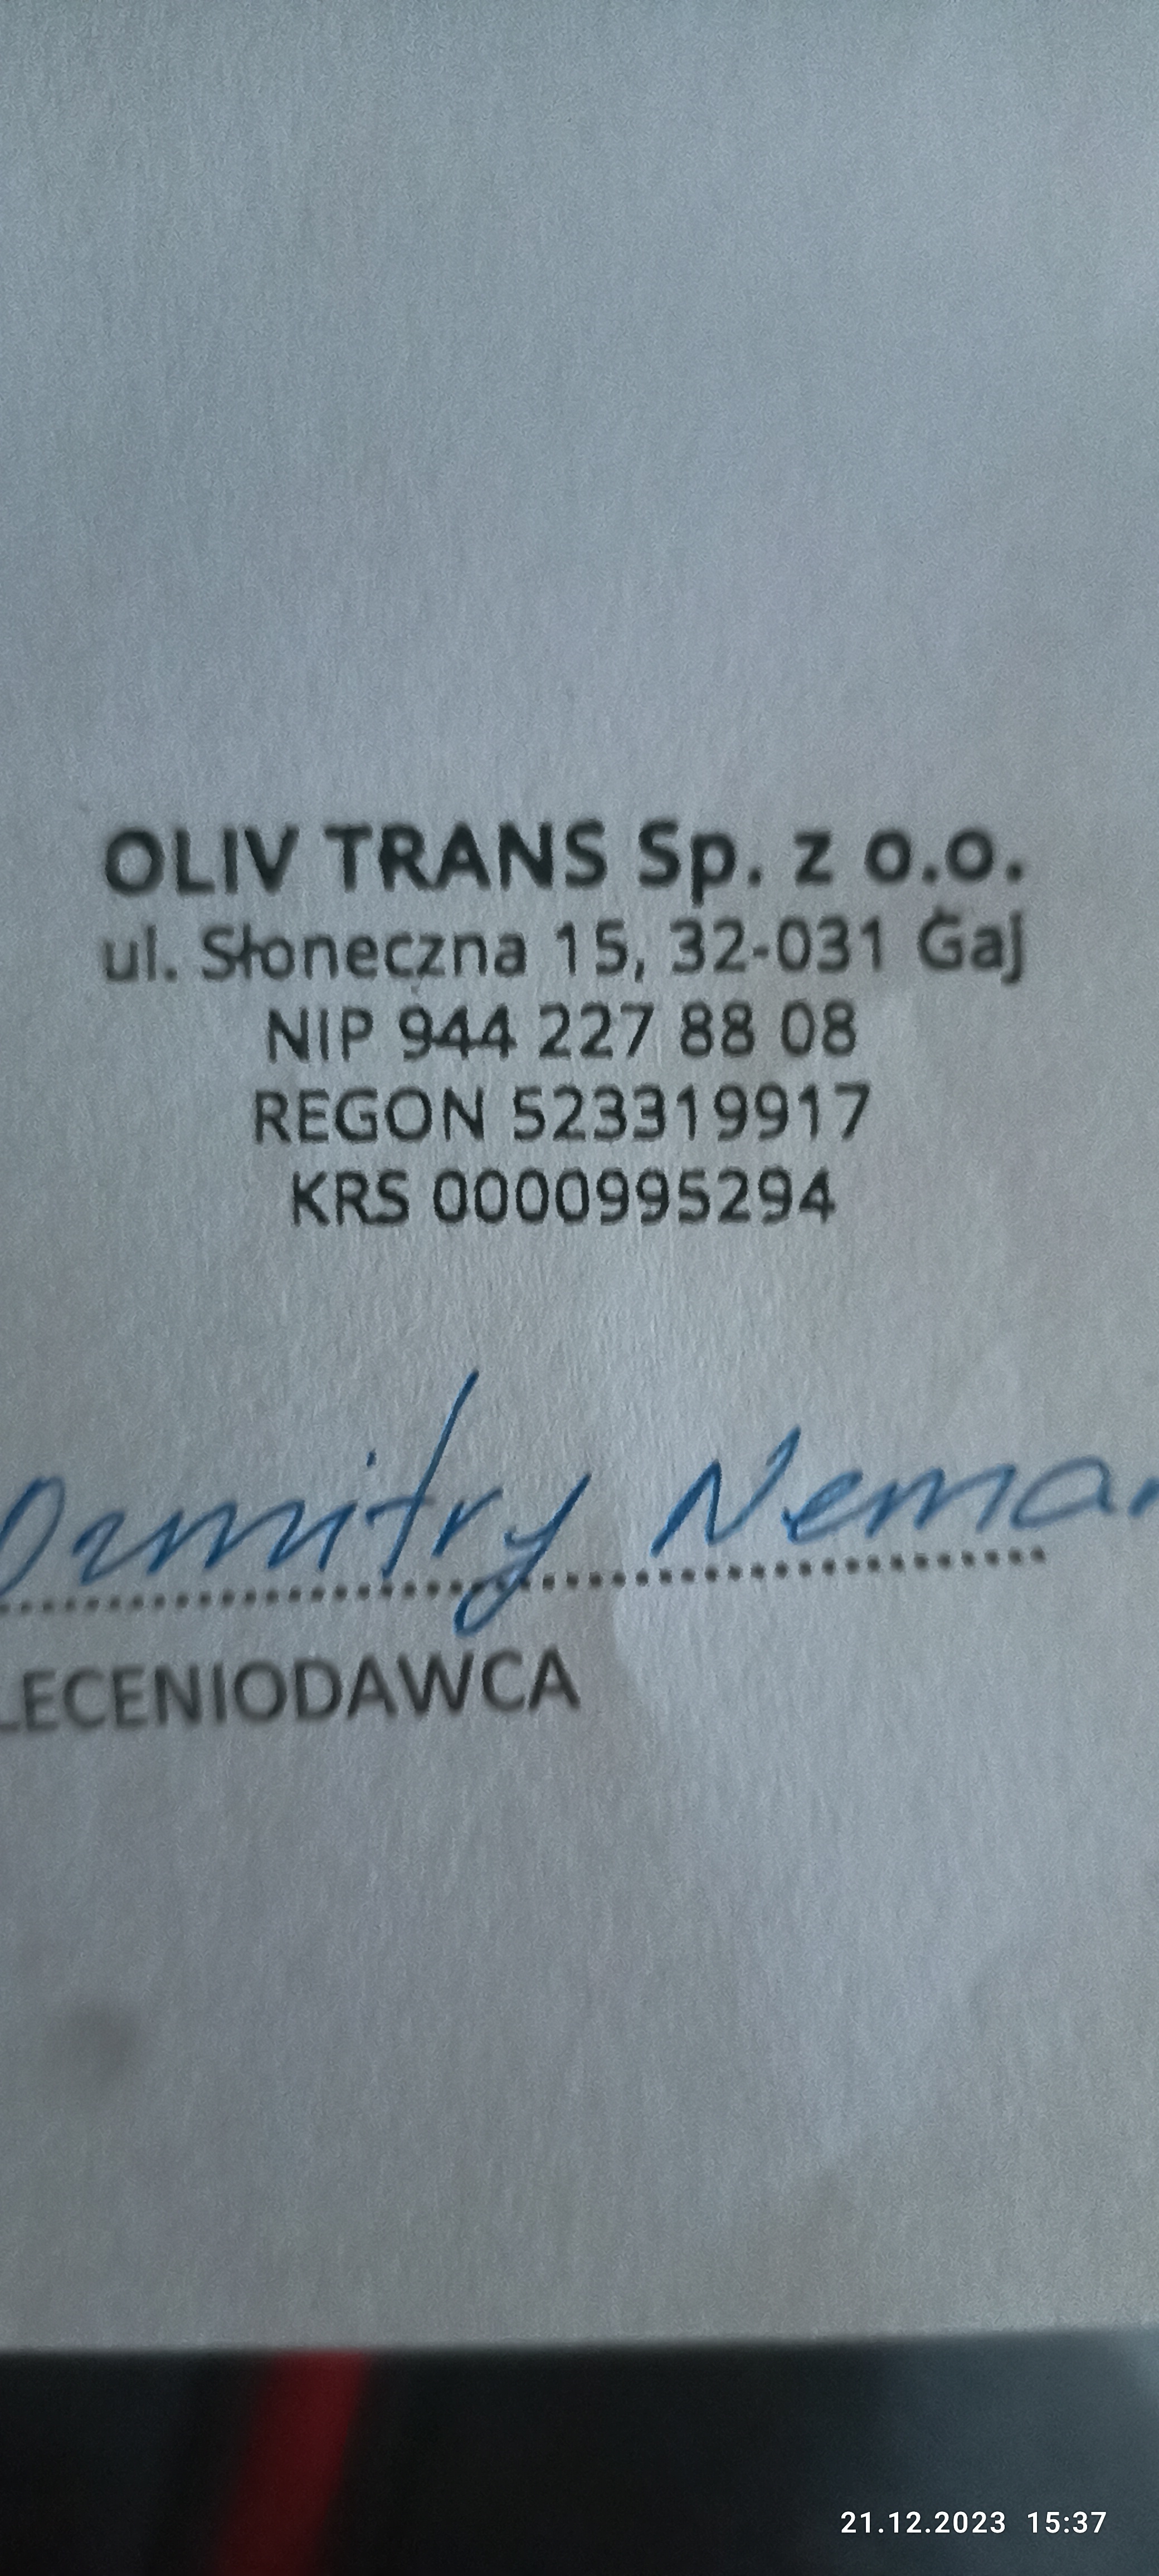 OLIV TRANS Sp. z o.o., +48 571 934 998 Логотип(logo)